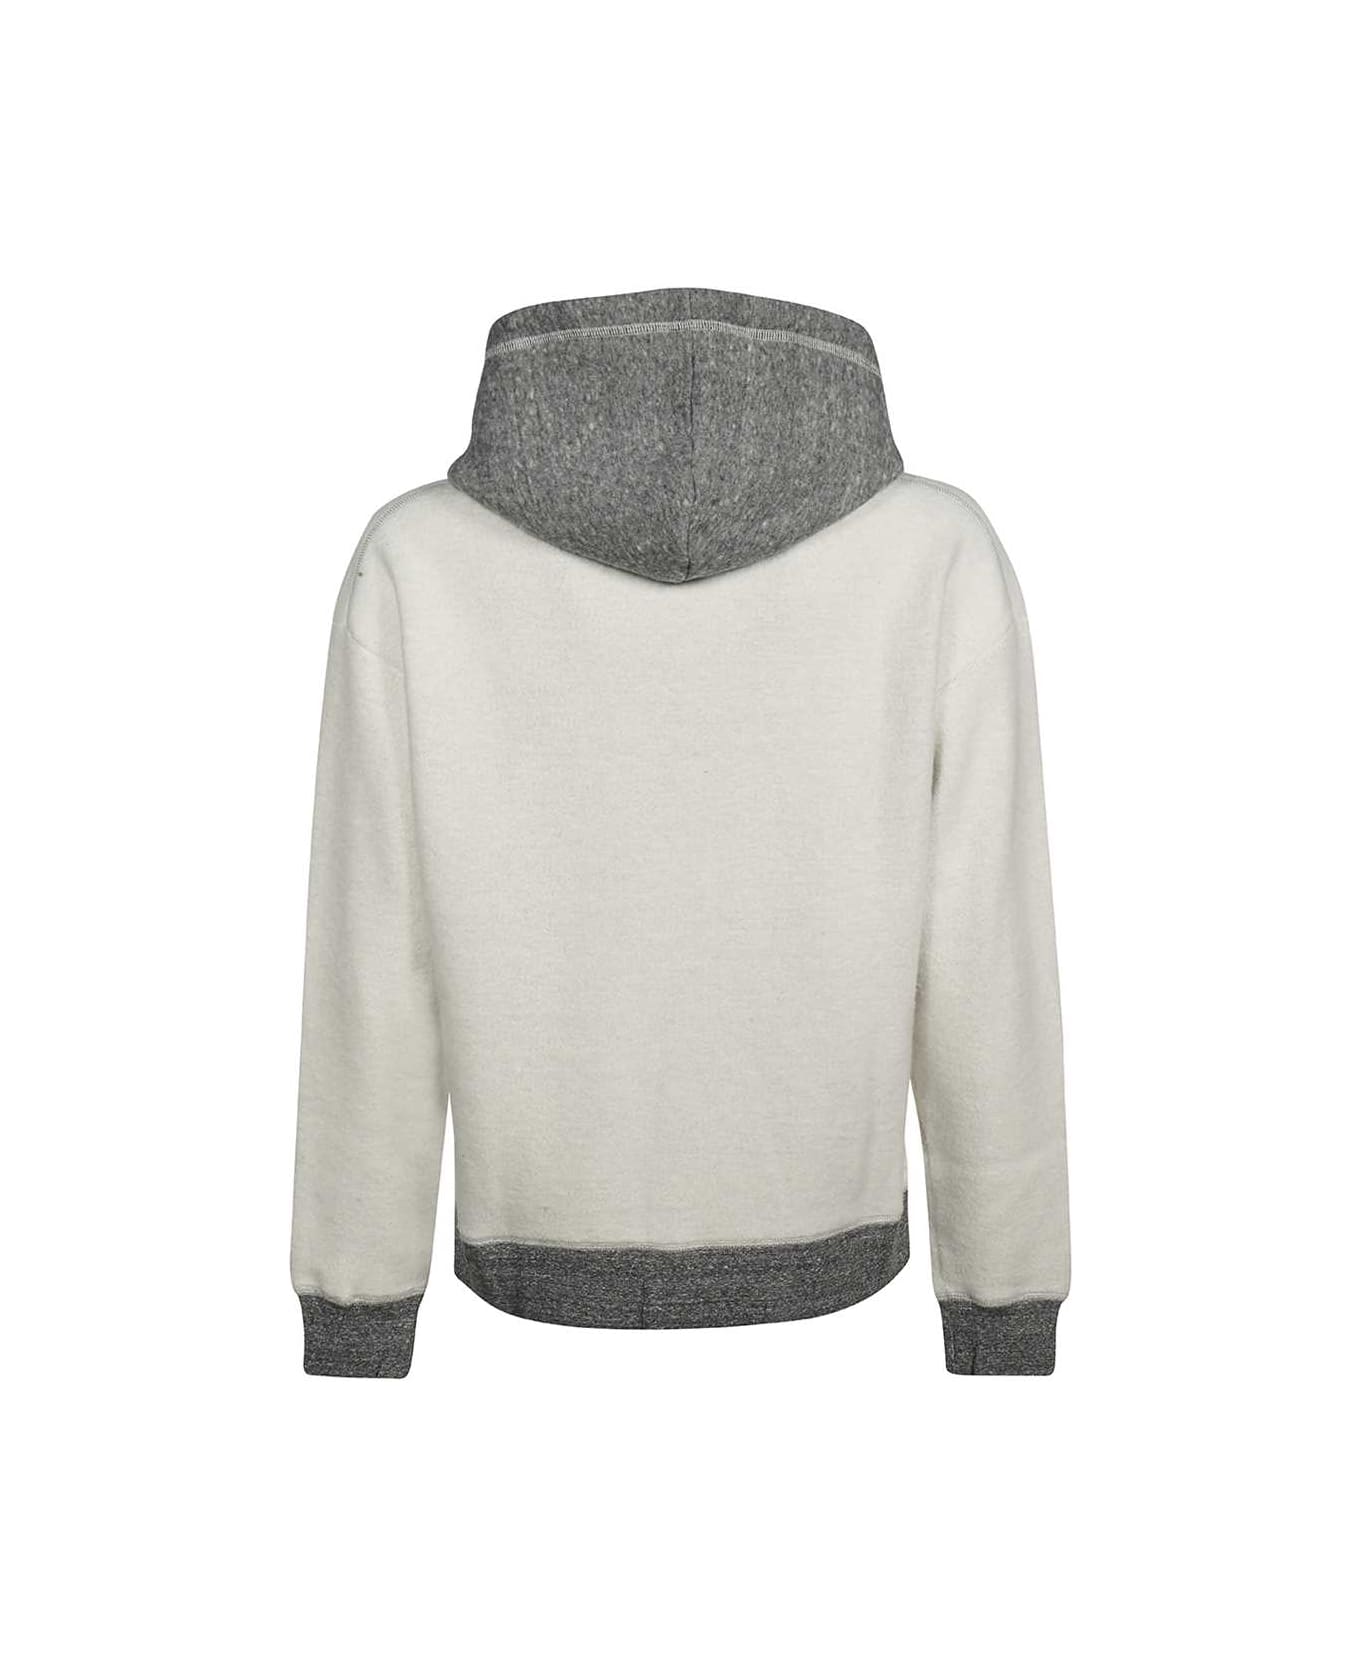 Dsquared2 Hooded Sweatshirt - grey